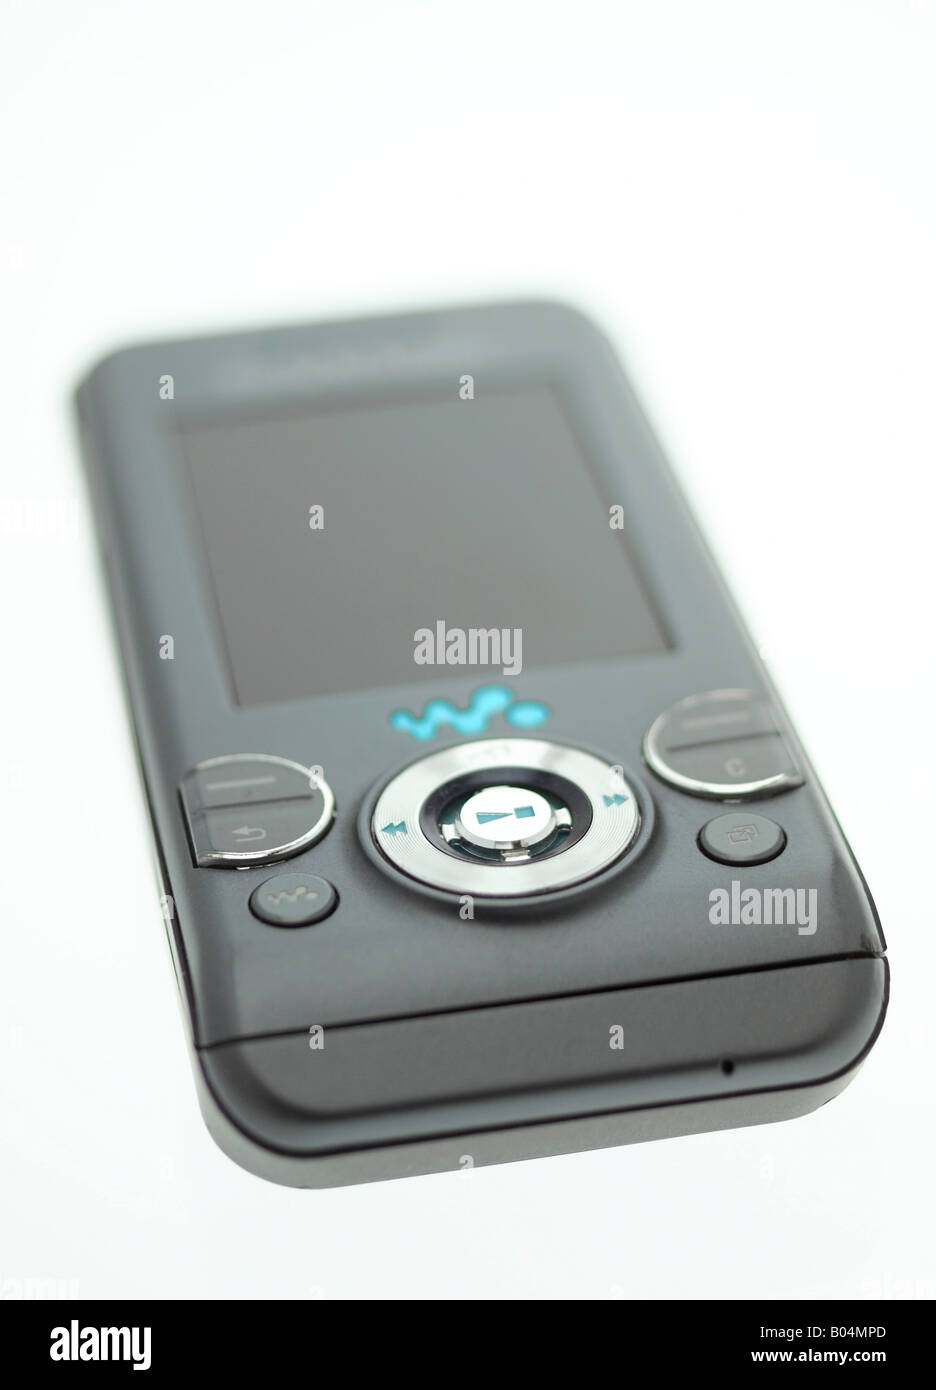 Sony Ericsson Mobiltelefon Stockfoto